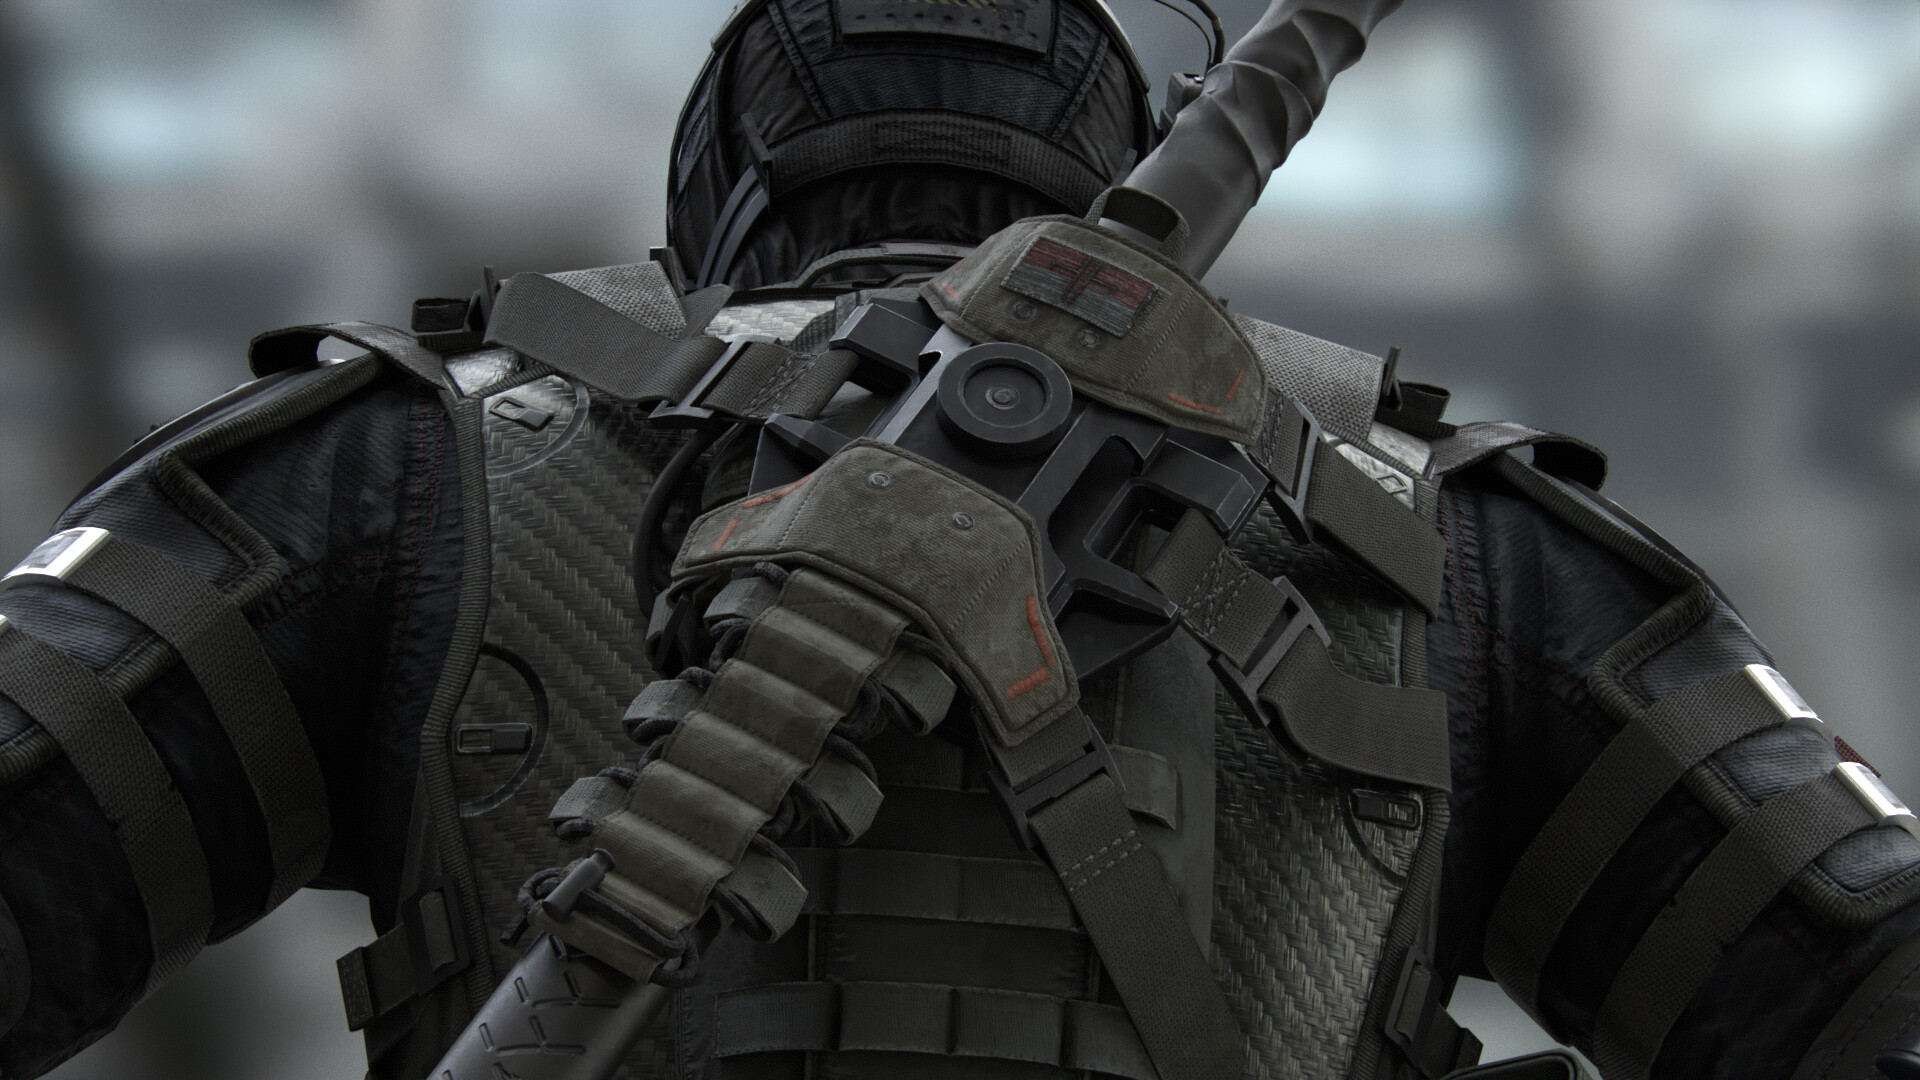 ArtStation - Weapon & Equipment Renders - Call of Duty: Black Ops 4